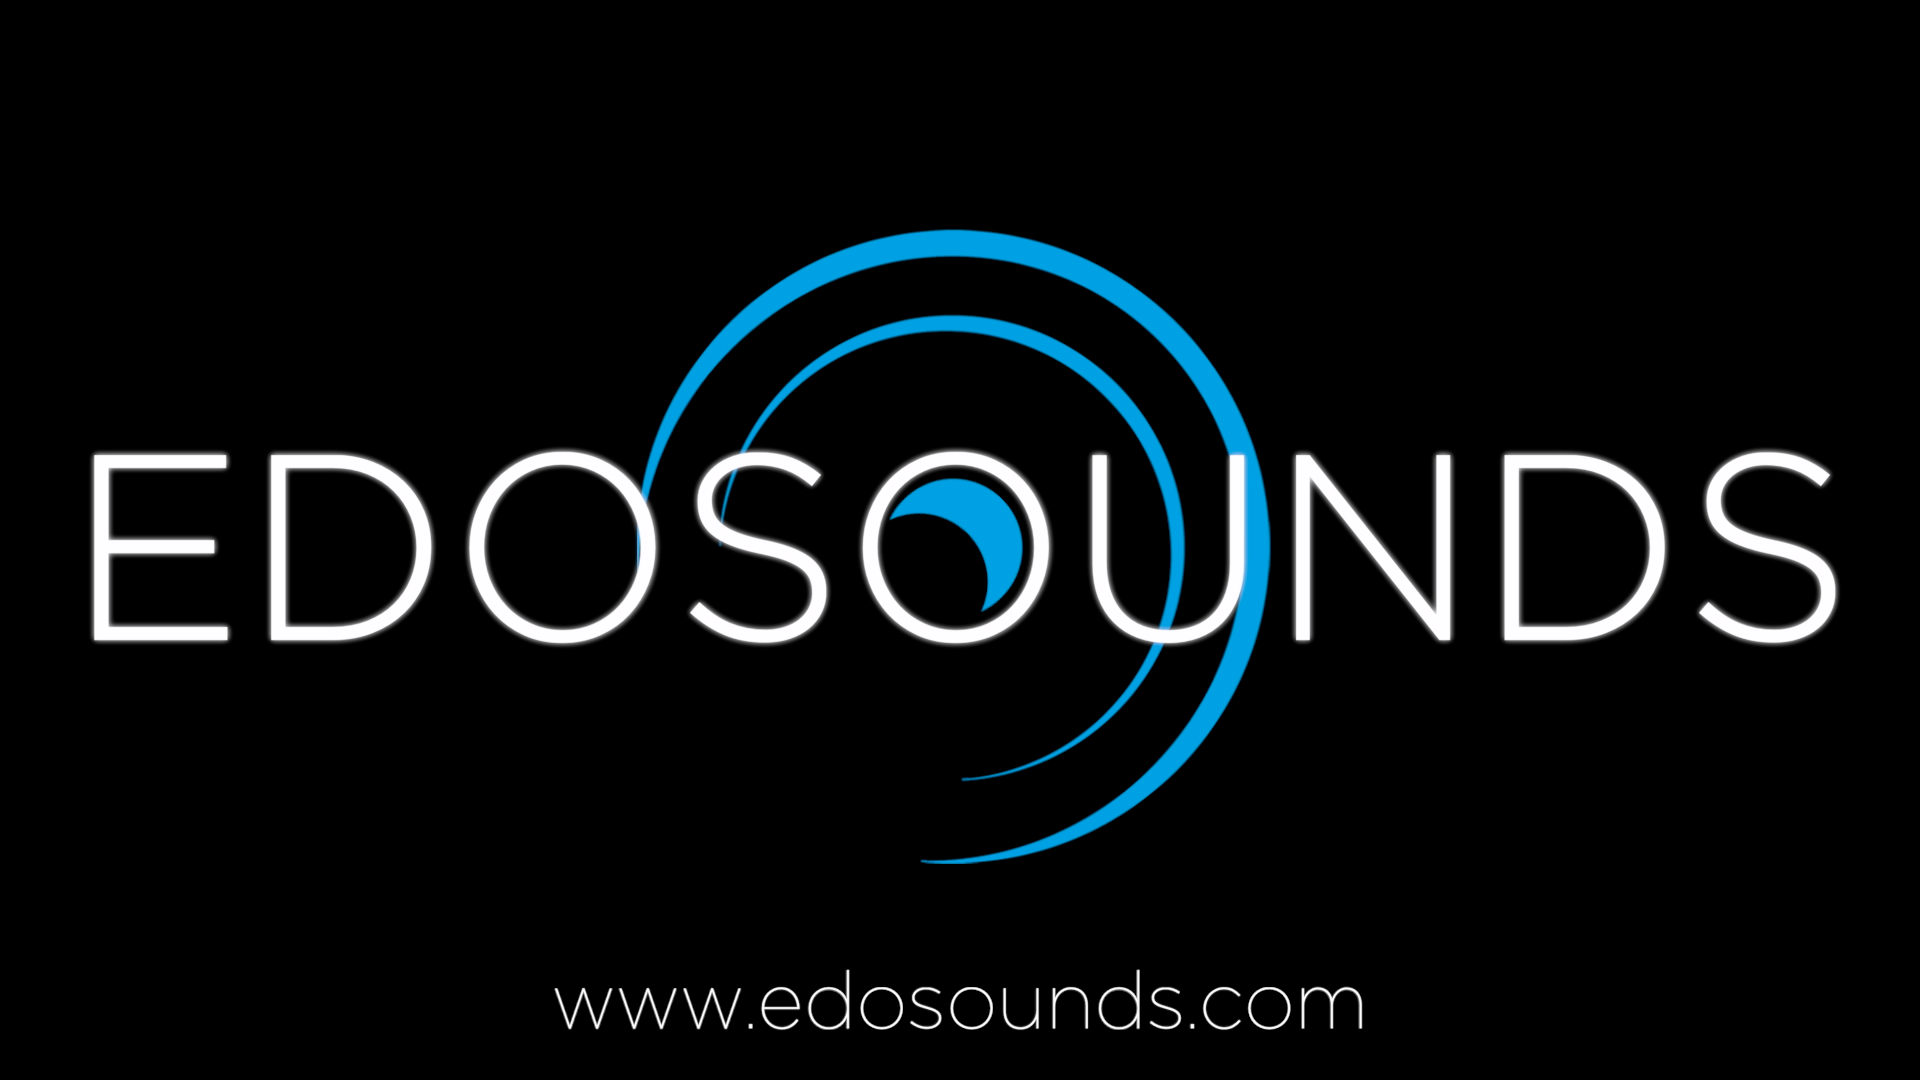 www.edosounds.com